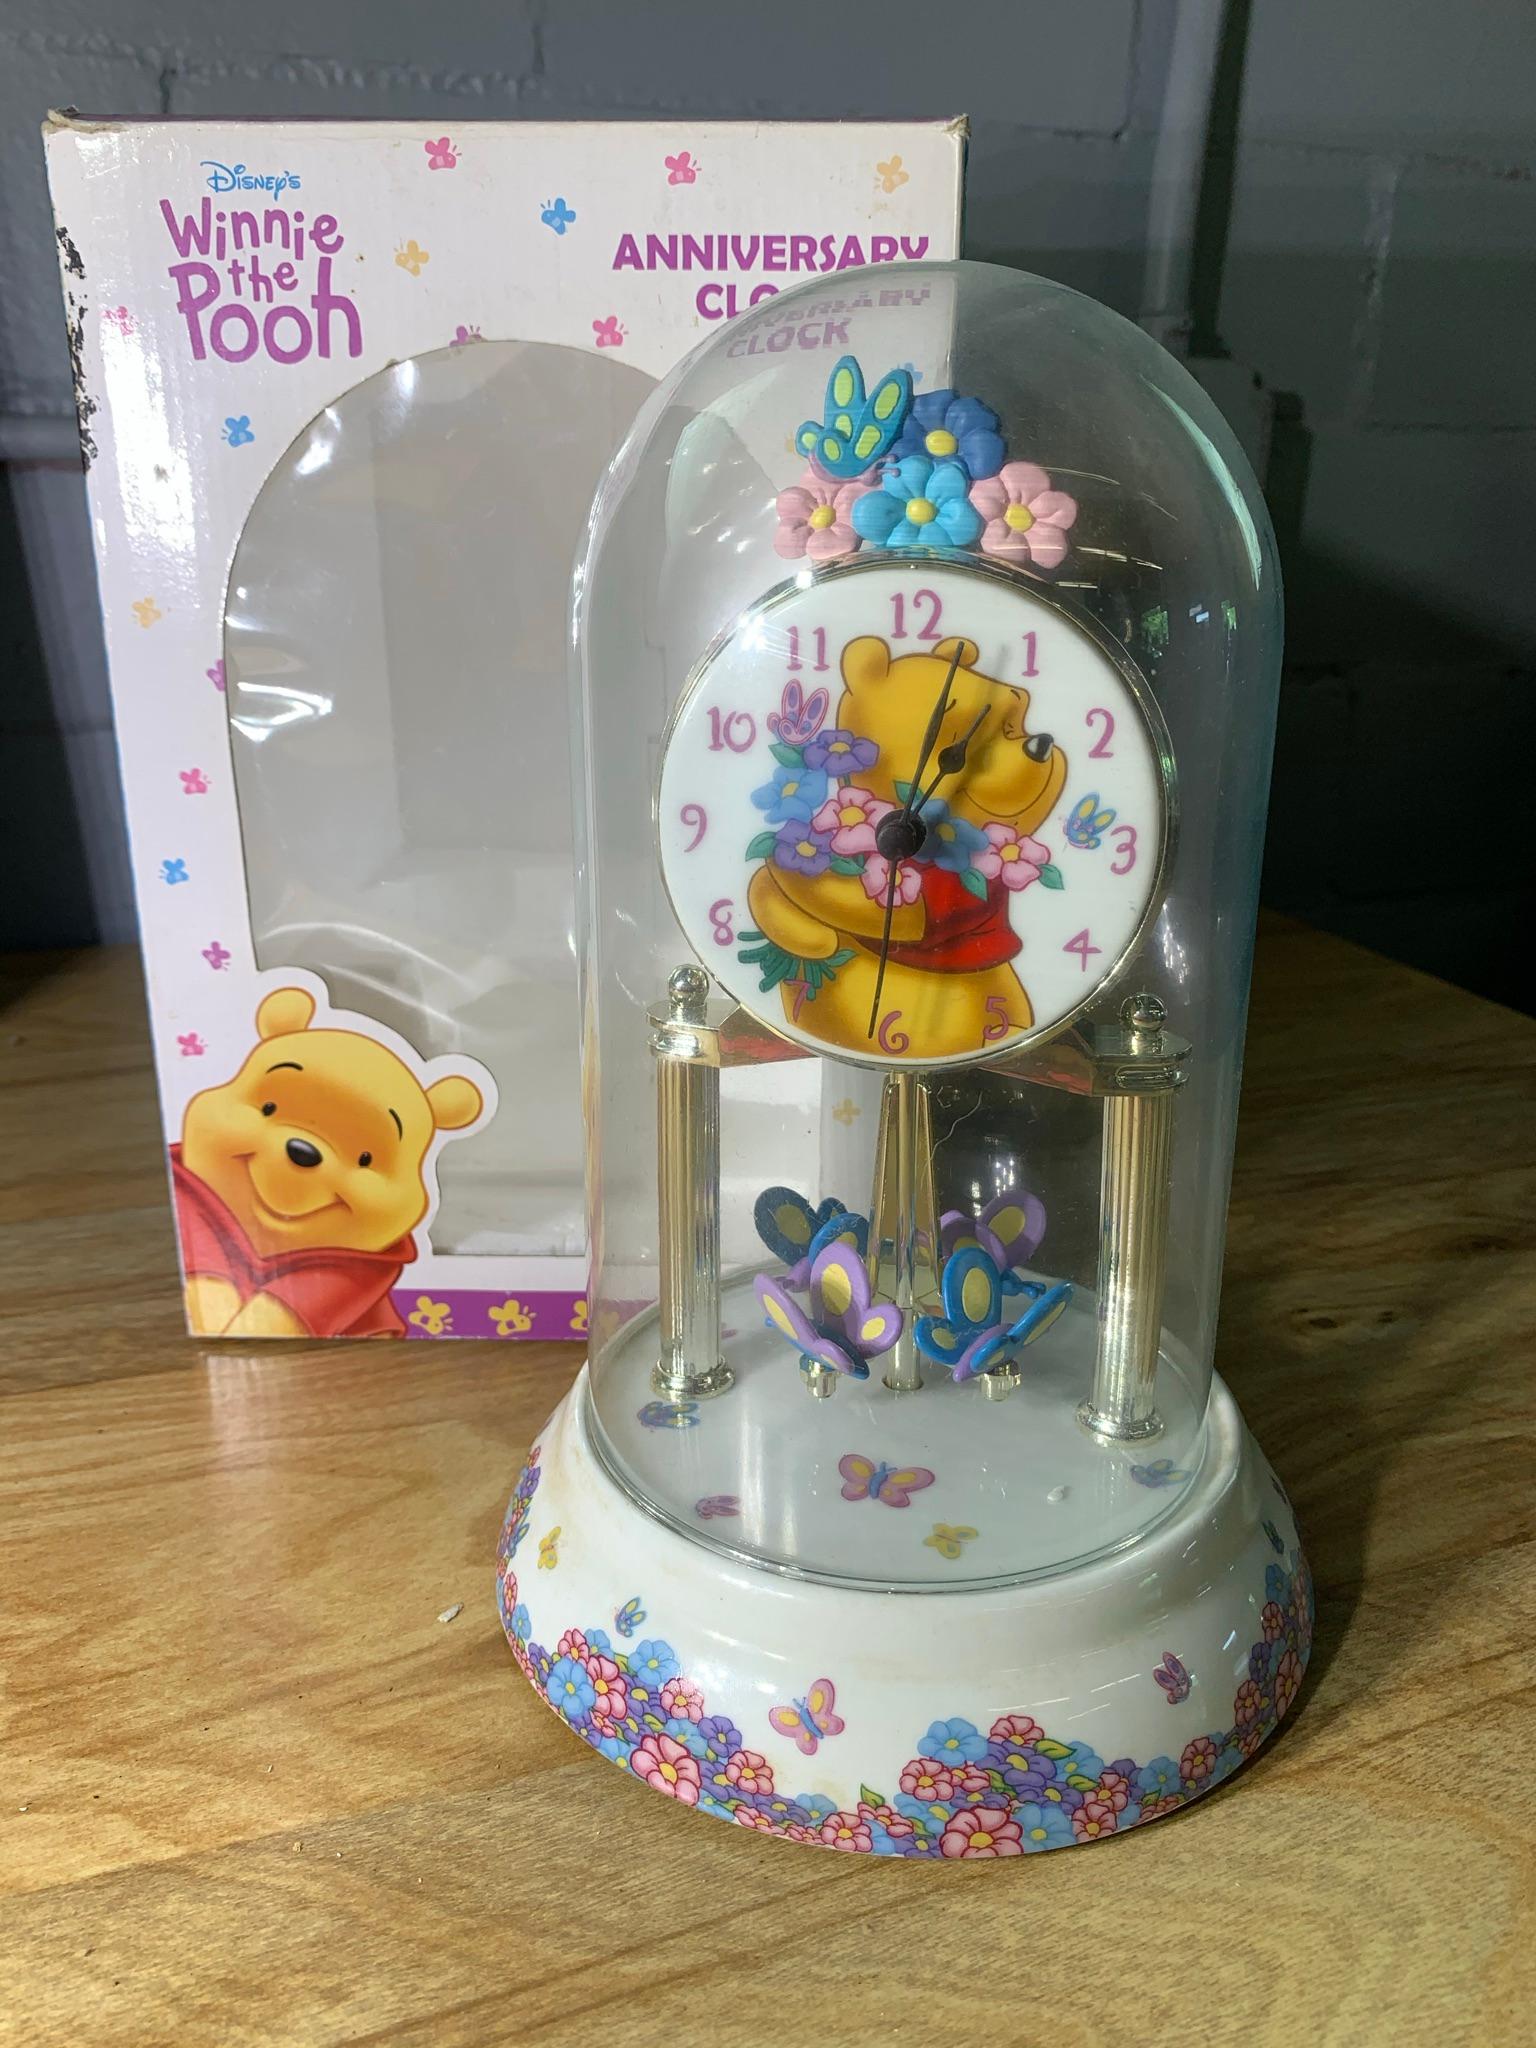 Winnie the Pooh Anniversary Clock